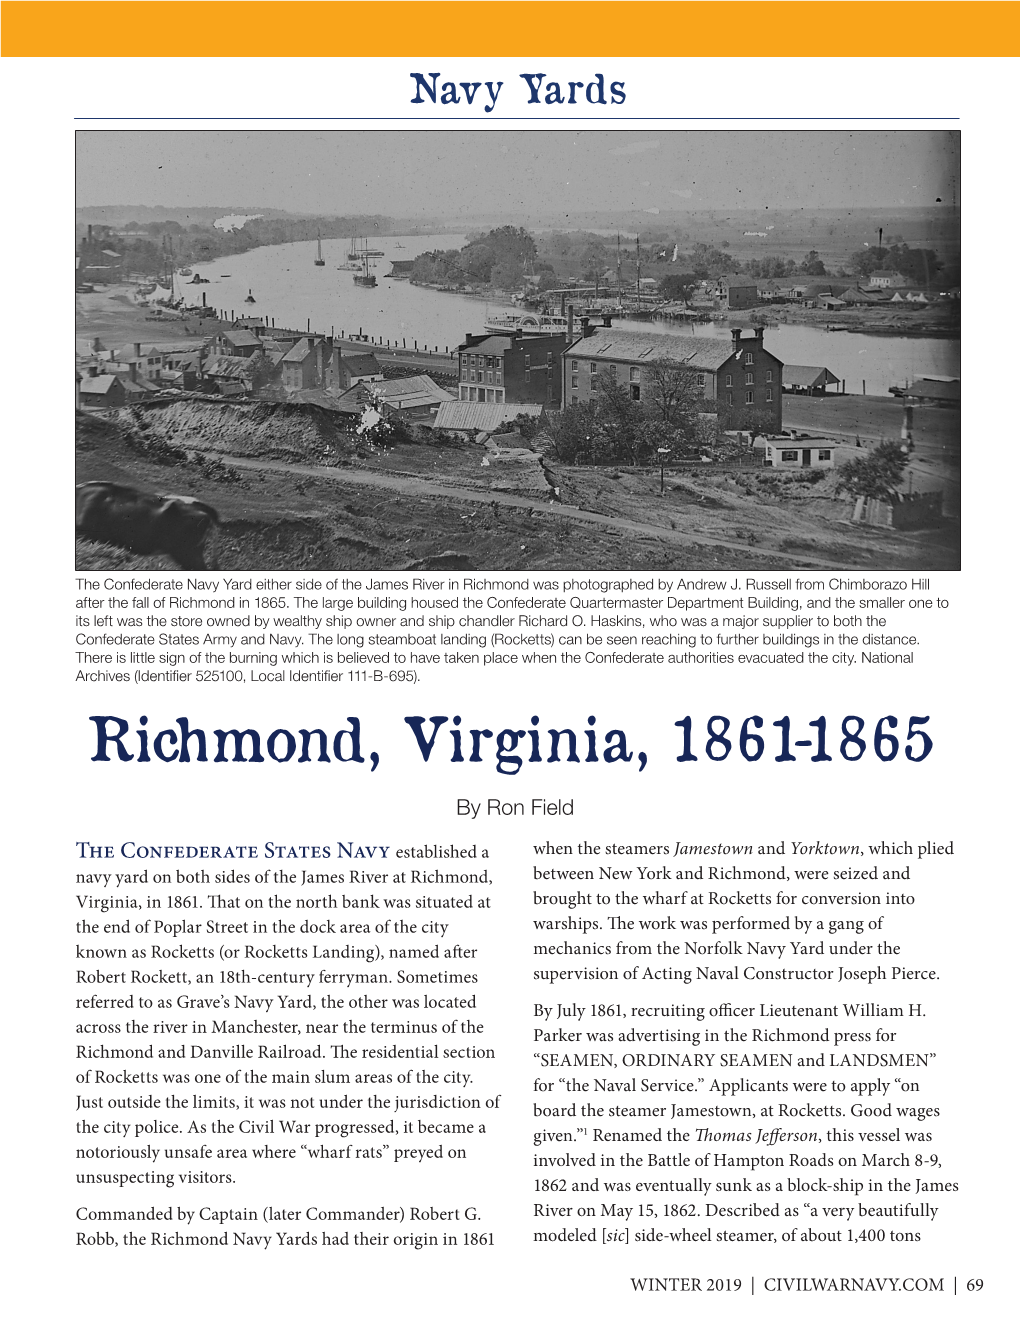 Richmond, Virginia, 1861-1865